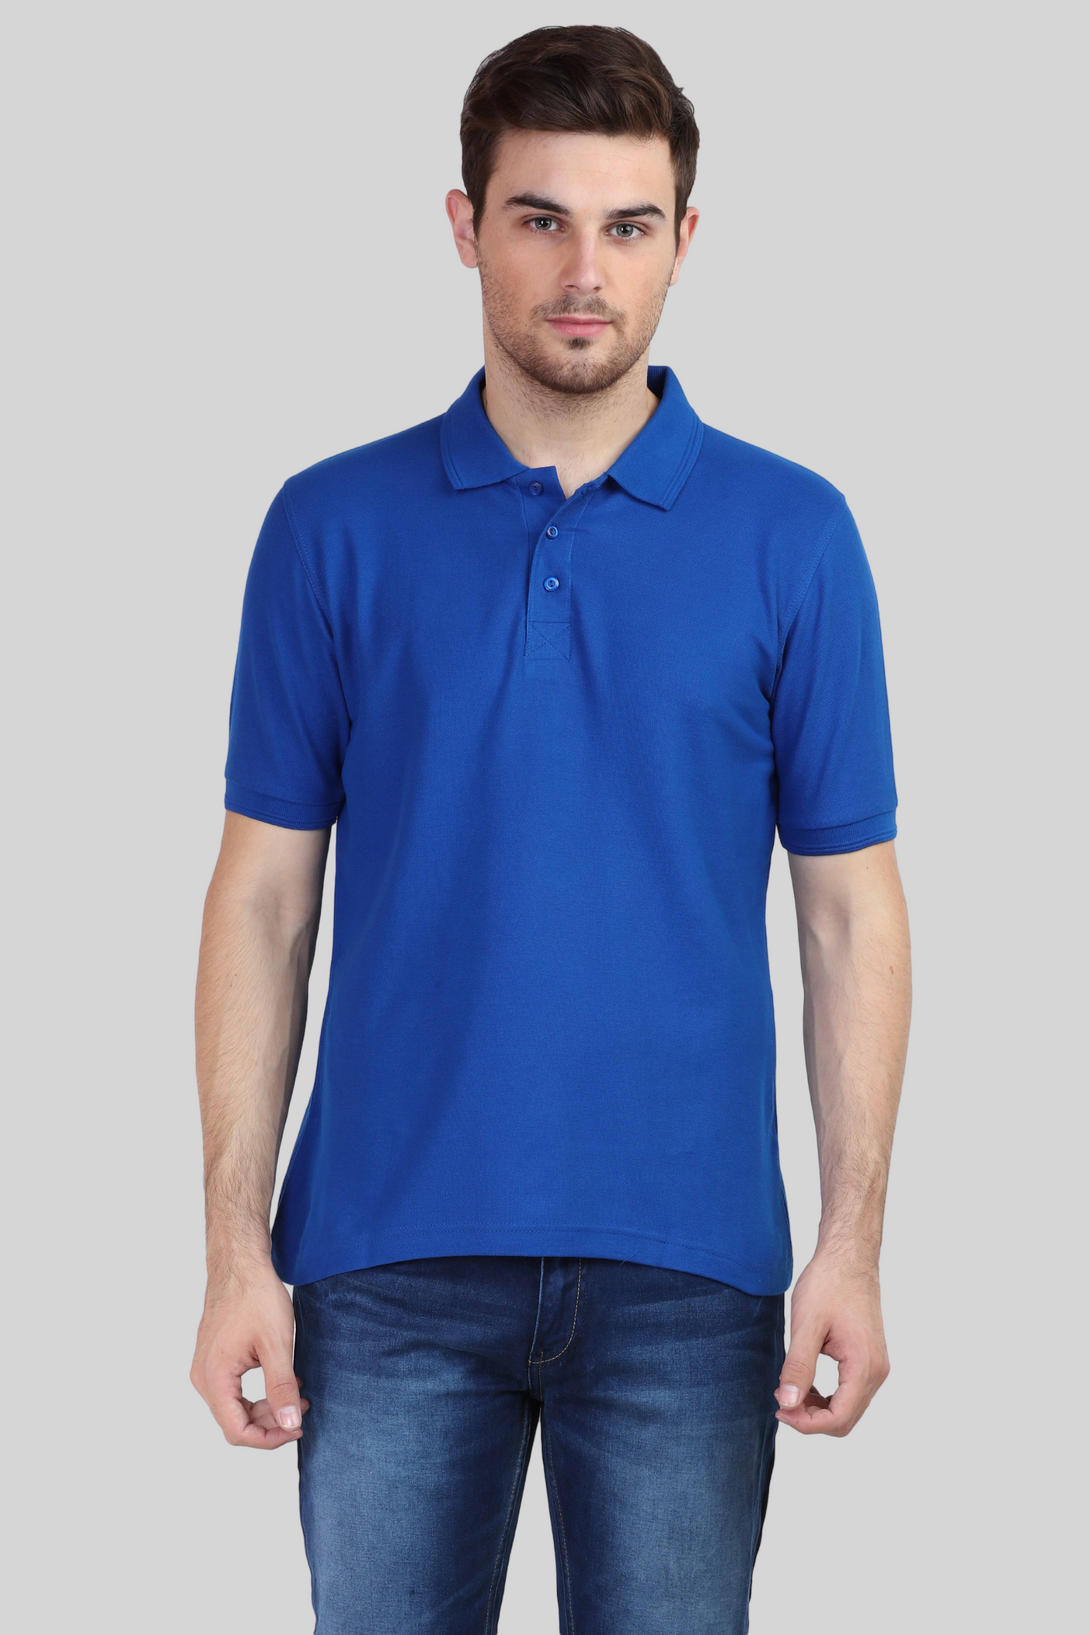 Royal Blue Polo T-Shirt For Men - WowWaves - 1